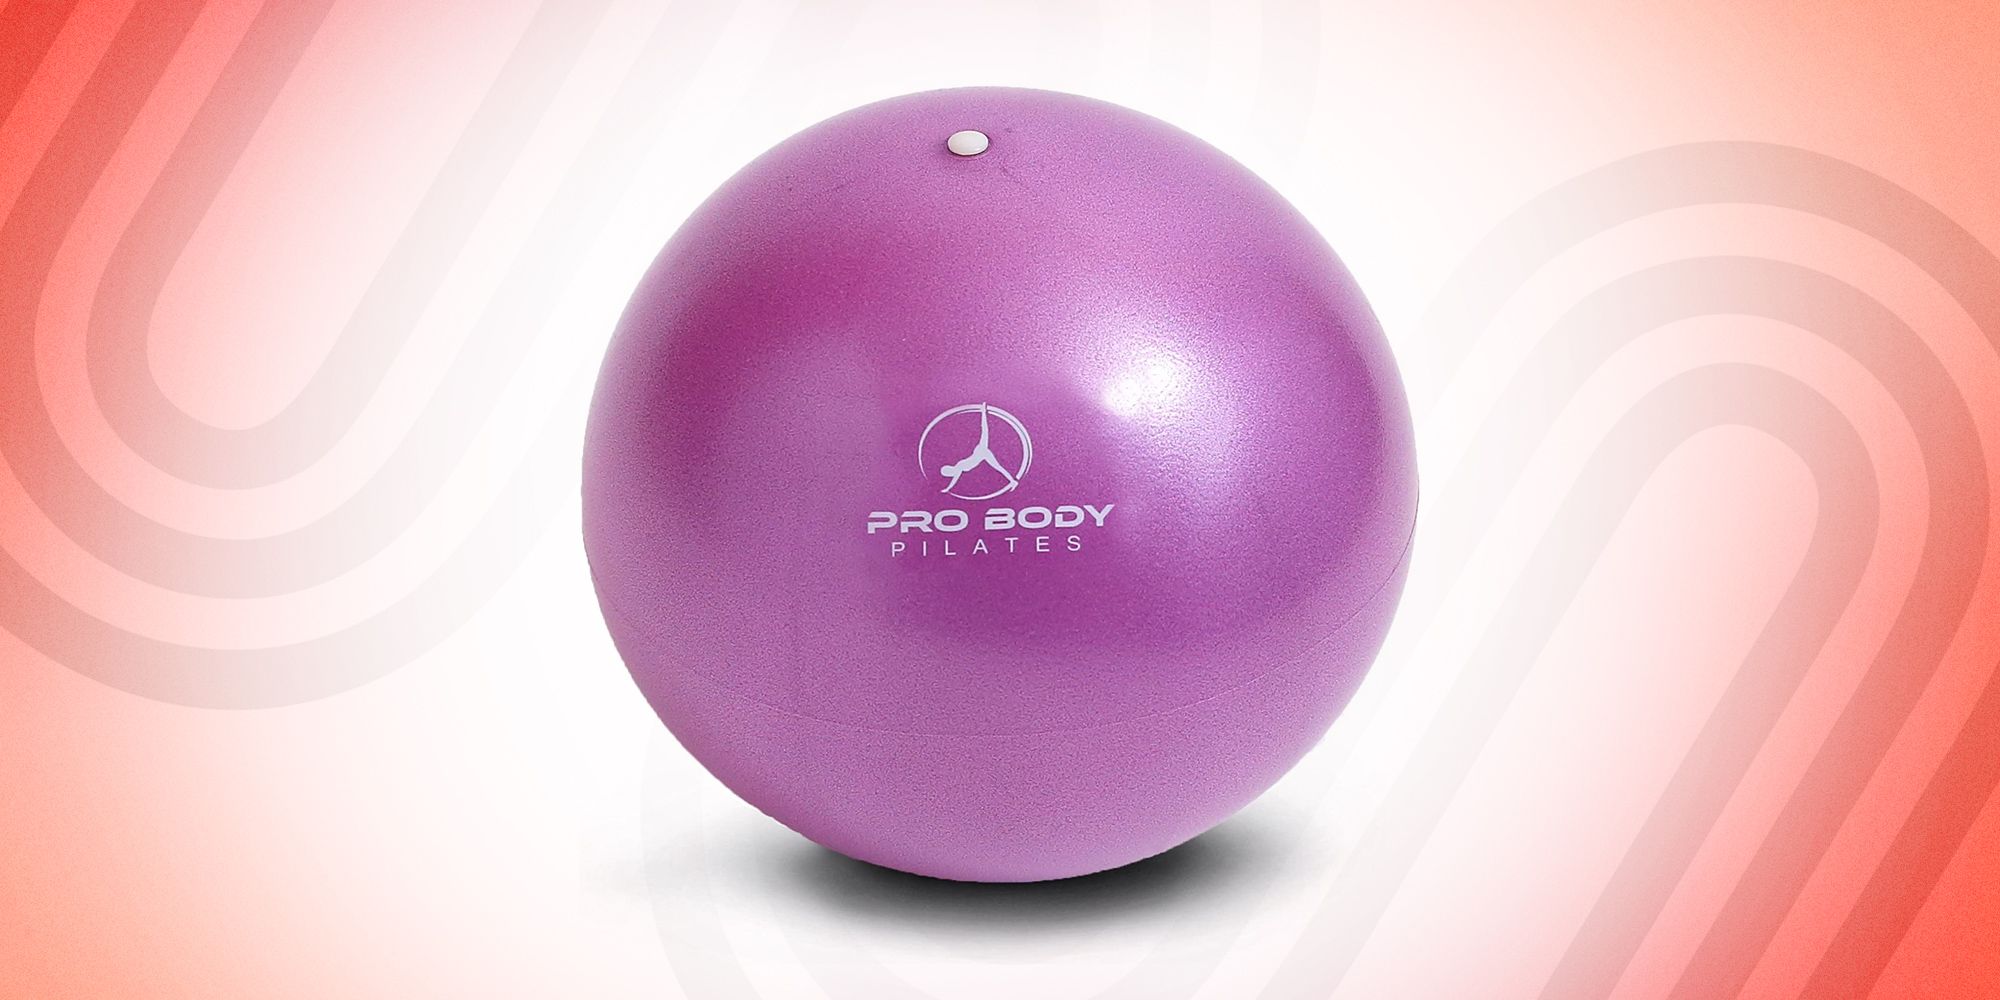  ProBody Pilates Yoga Ball Chair - Exercise Ball Chair